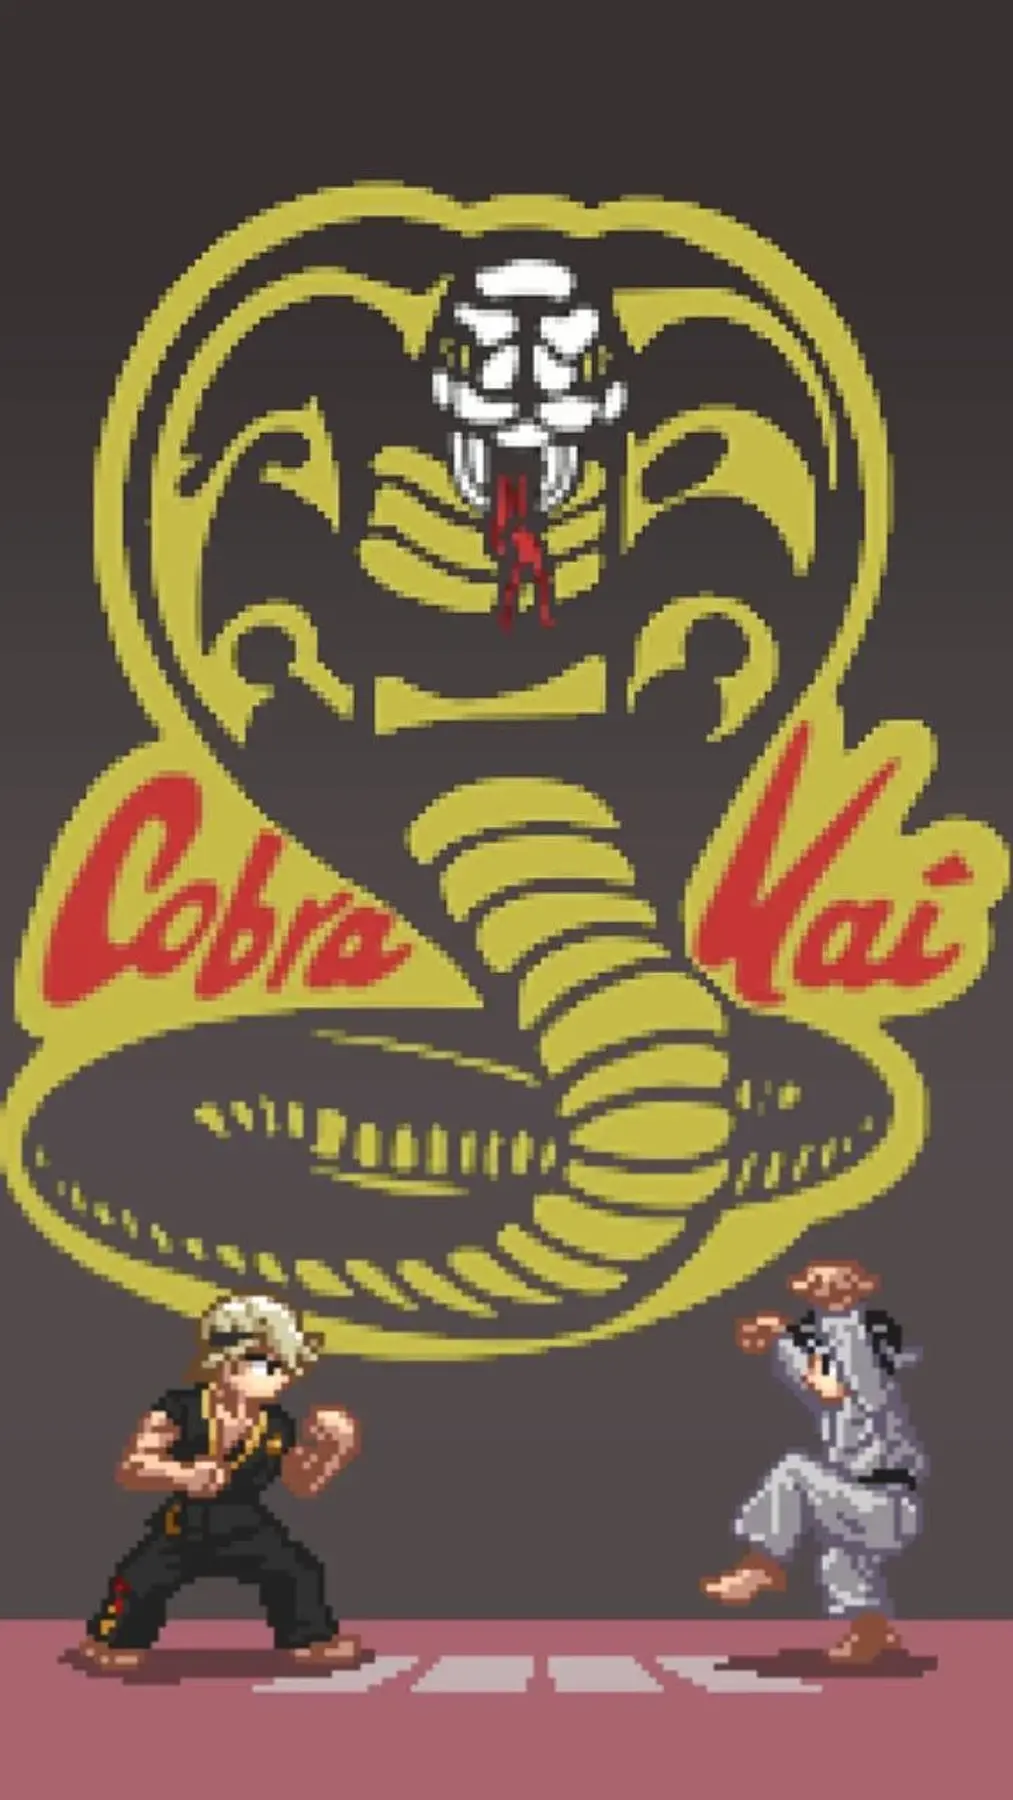 Cobra Kai Logo Wallpaper